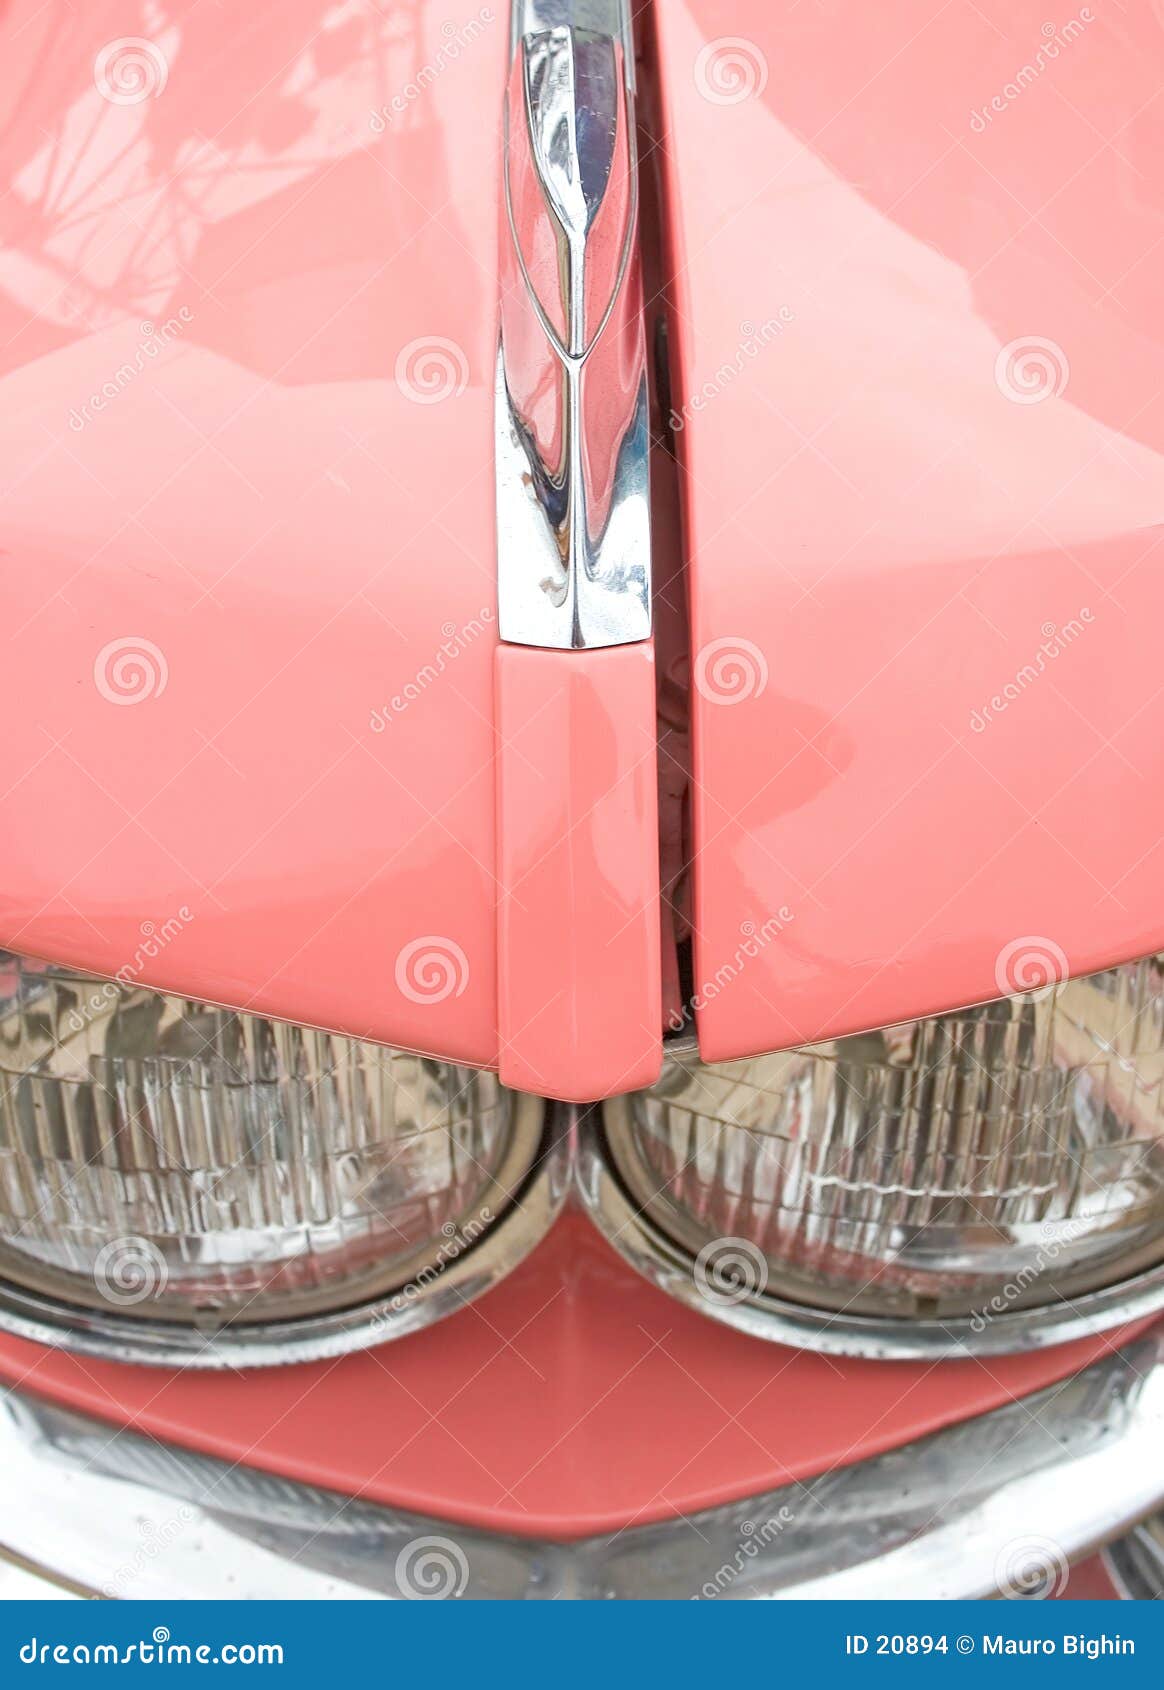 pink sixties car detail